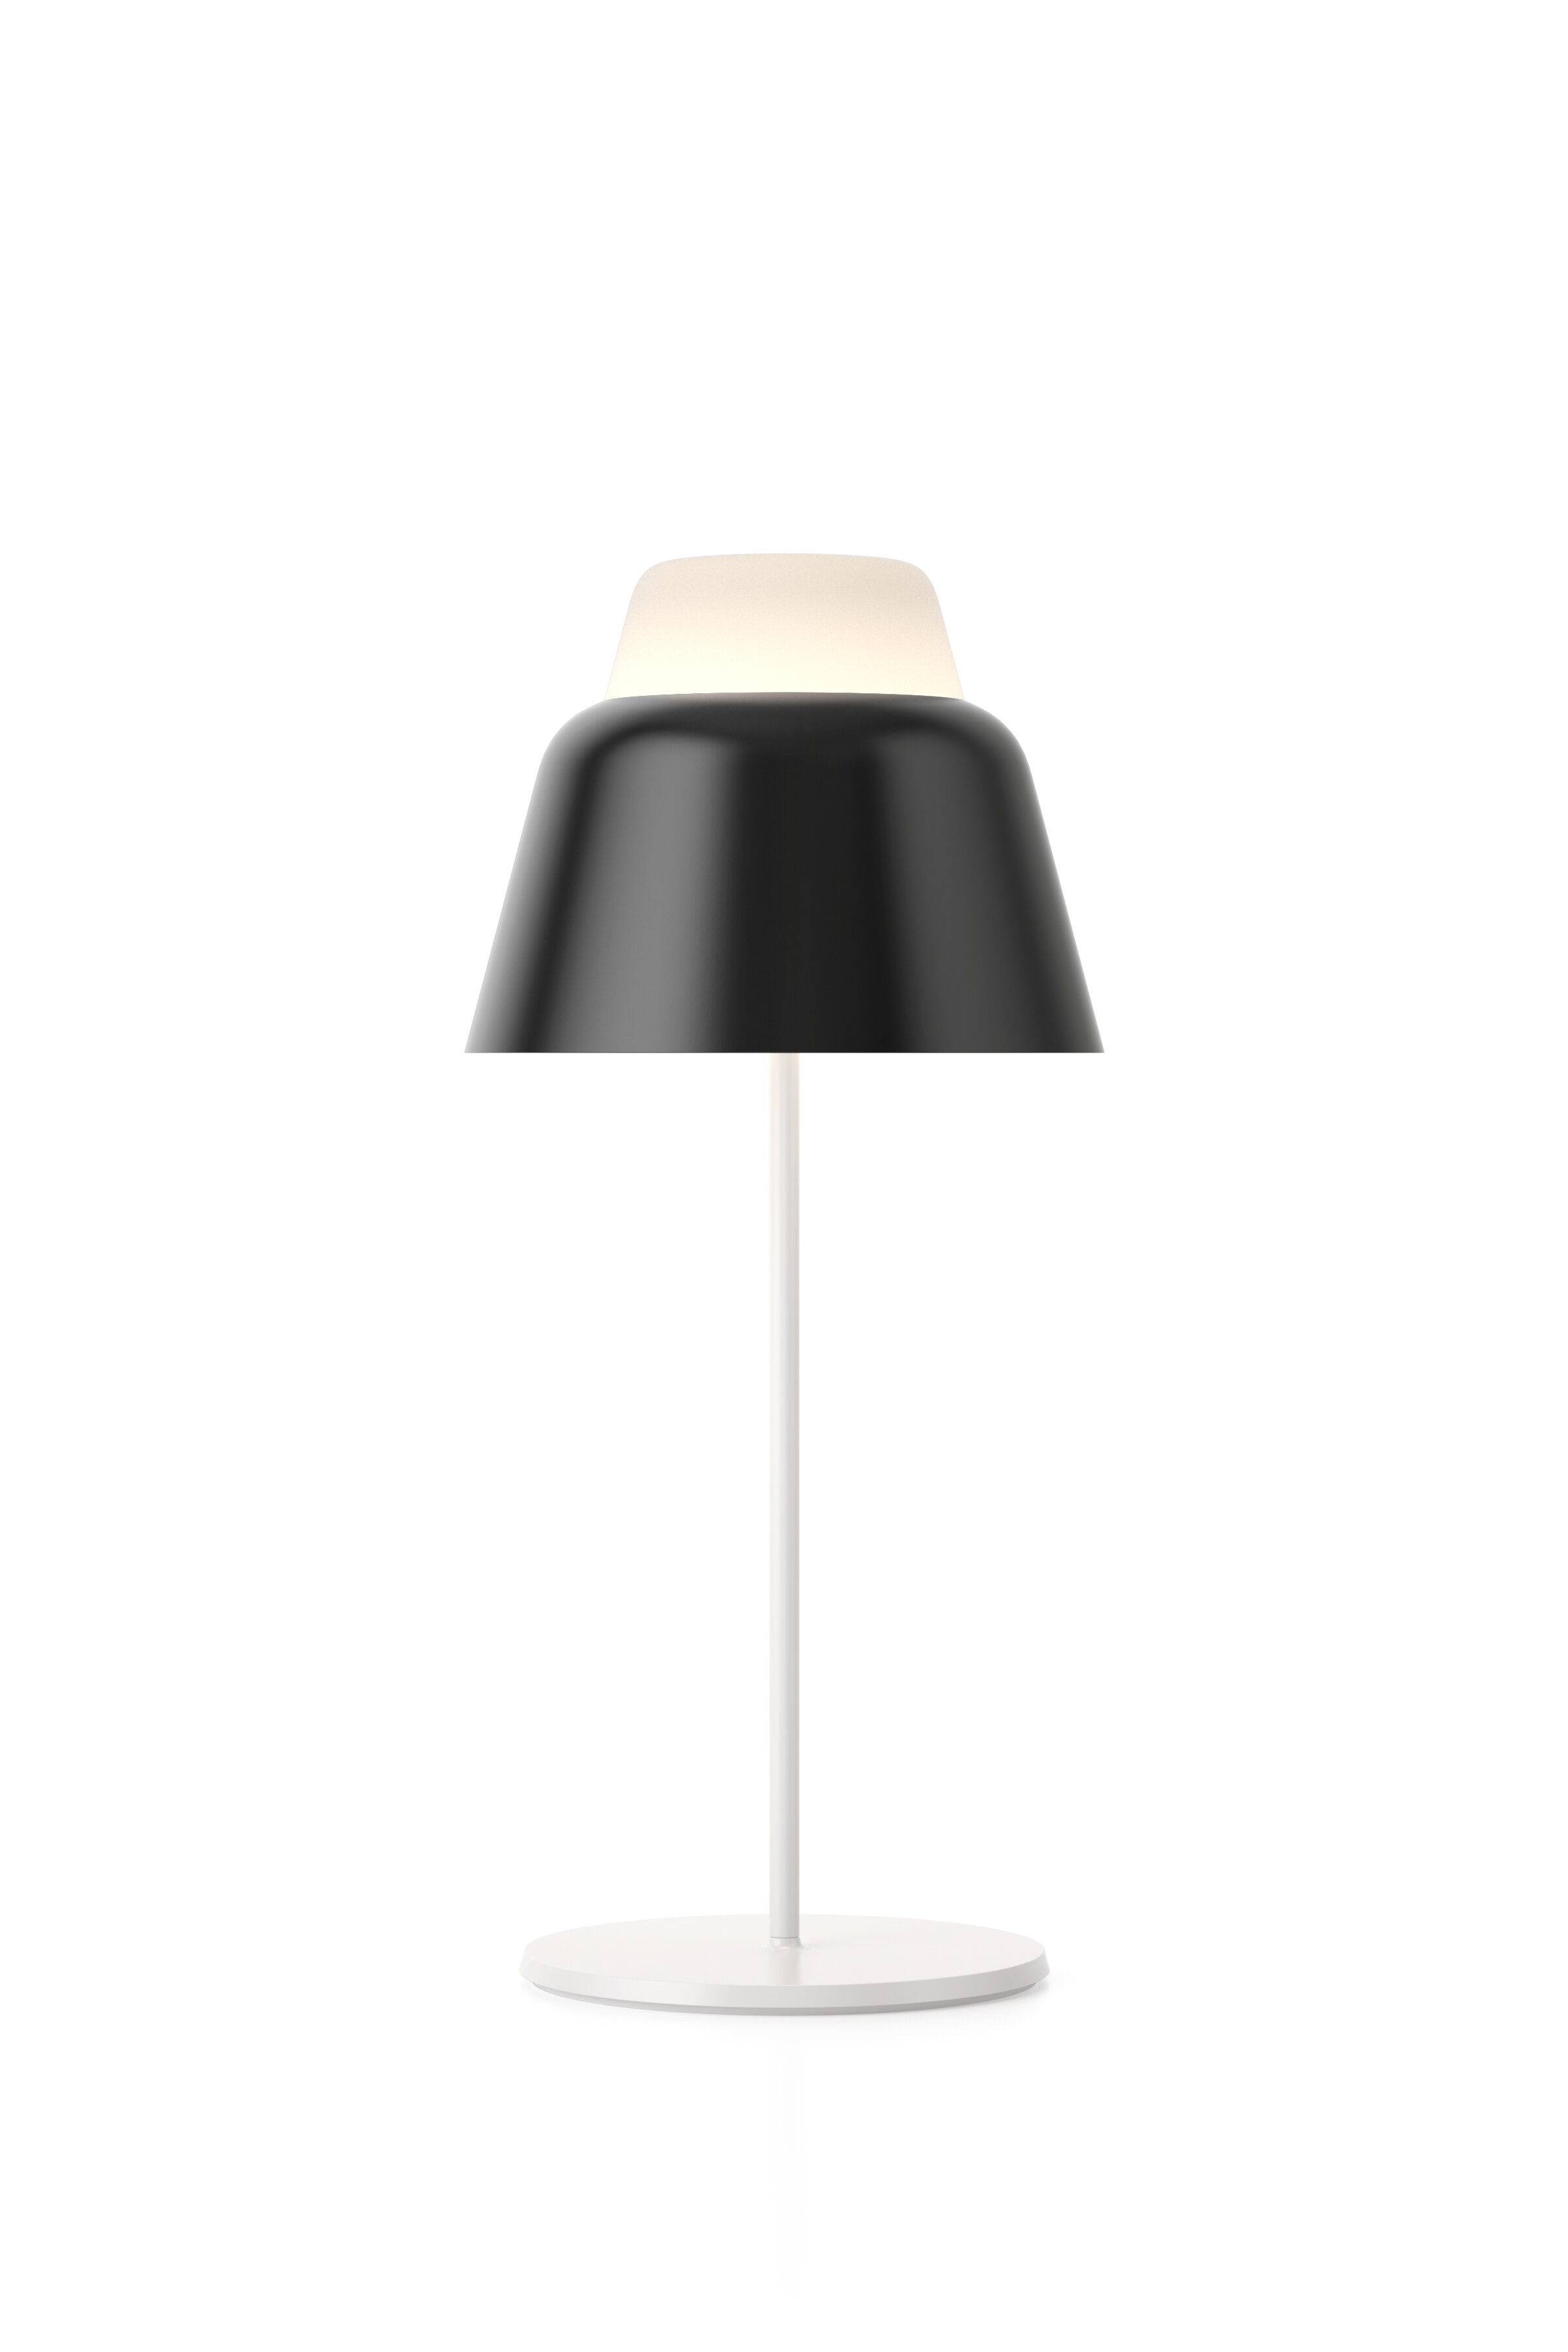 teo-modu-table-lamp-matte-black-on-cutout.jpg